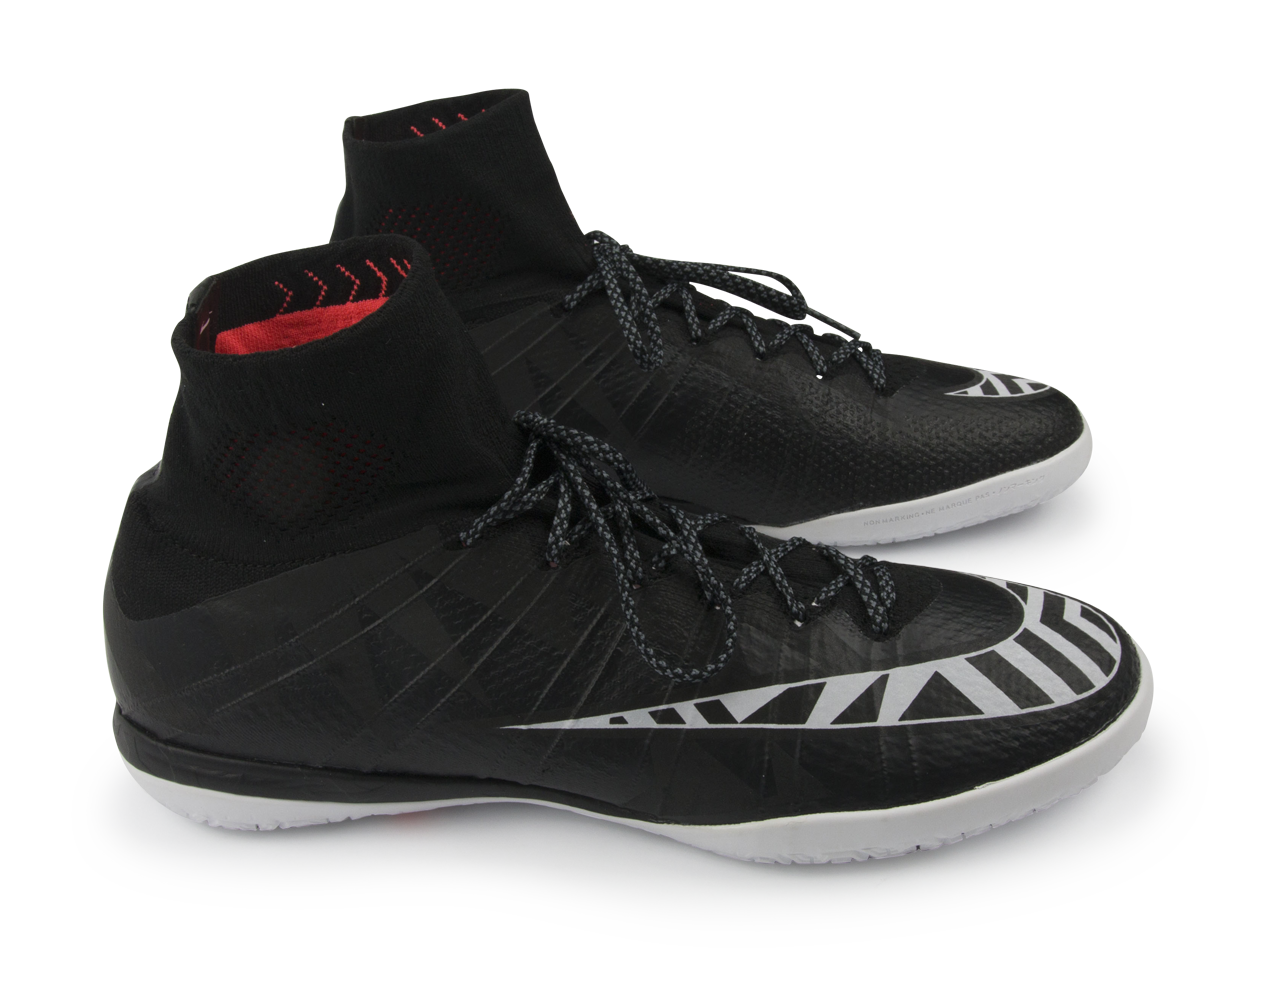 Nike Men's MercurialX Proximo Street Indoor Soccer Shoes Black/White/Hot Lava/Anthrct